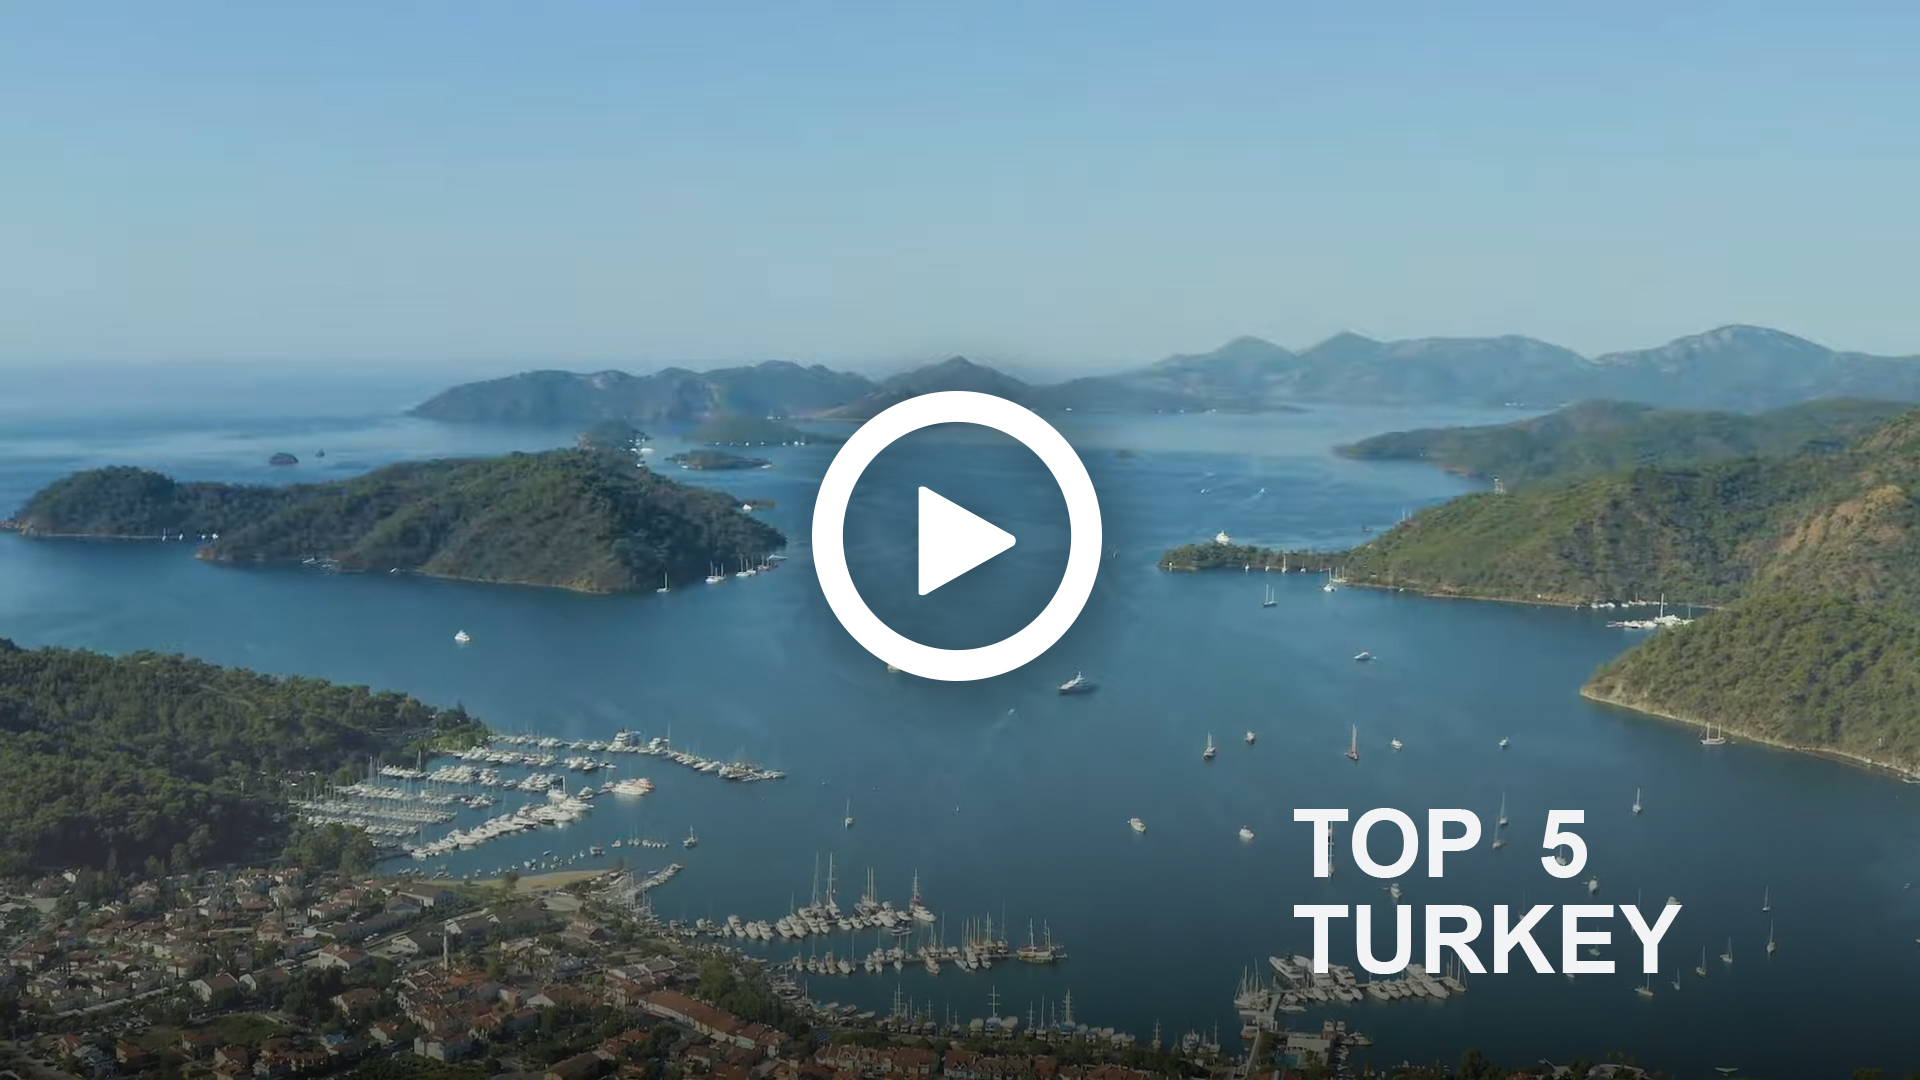 Sailing video to sale - Turkey